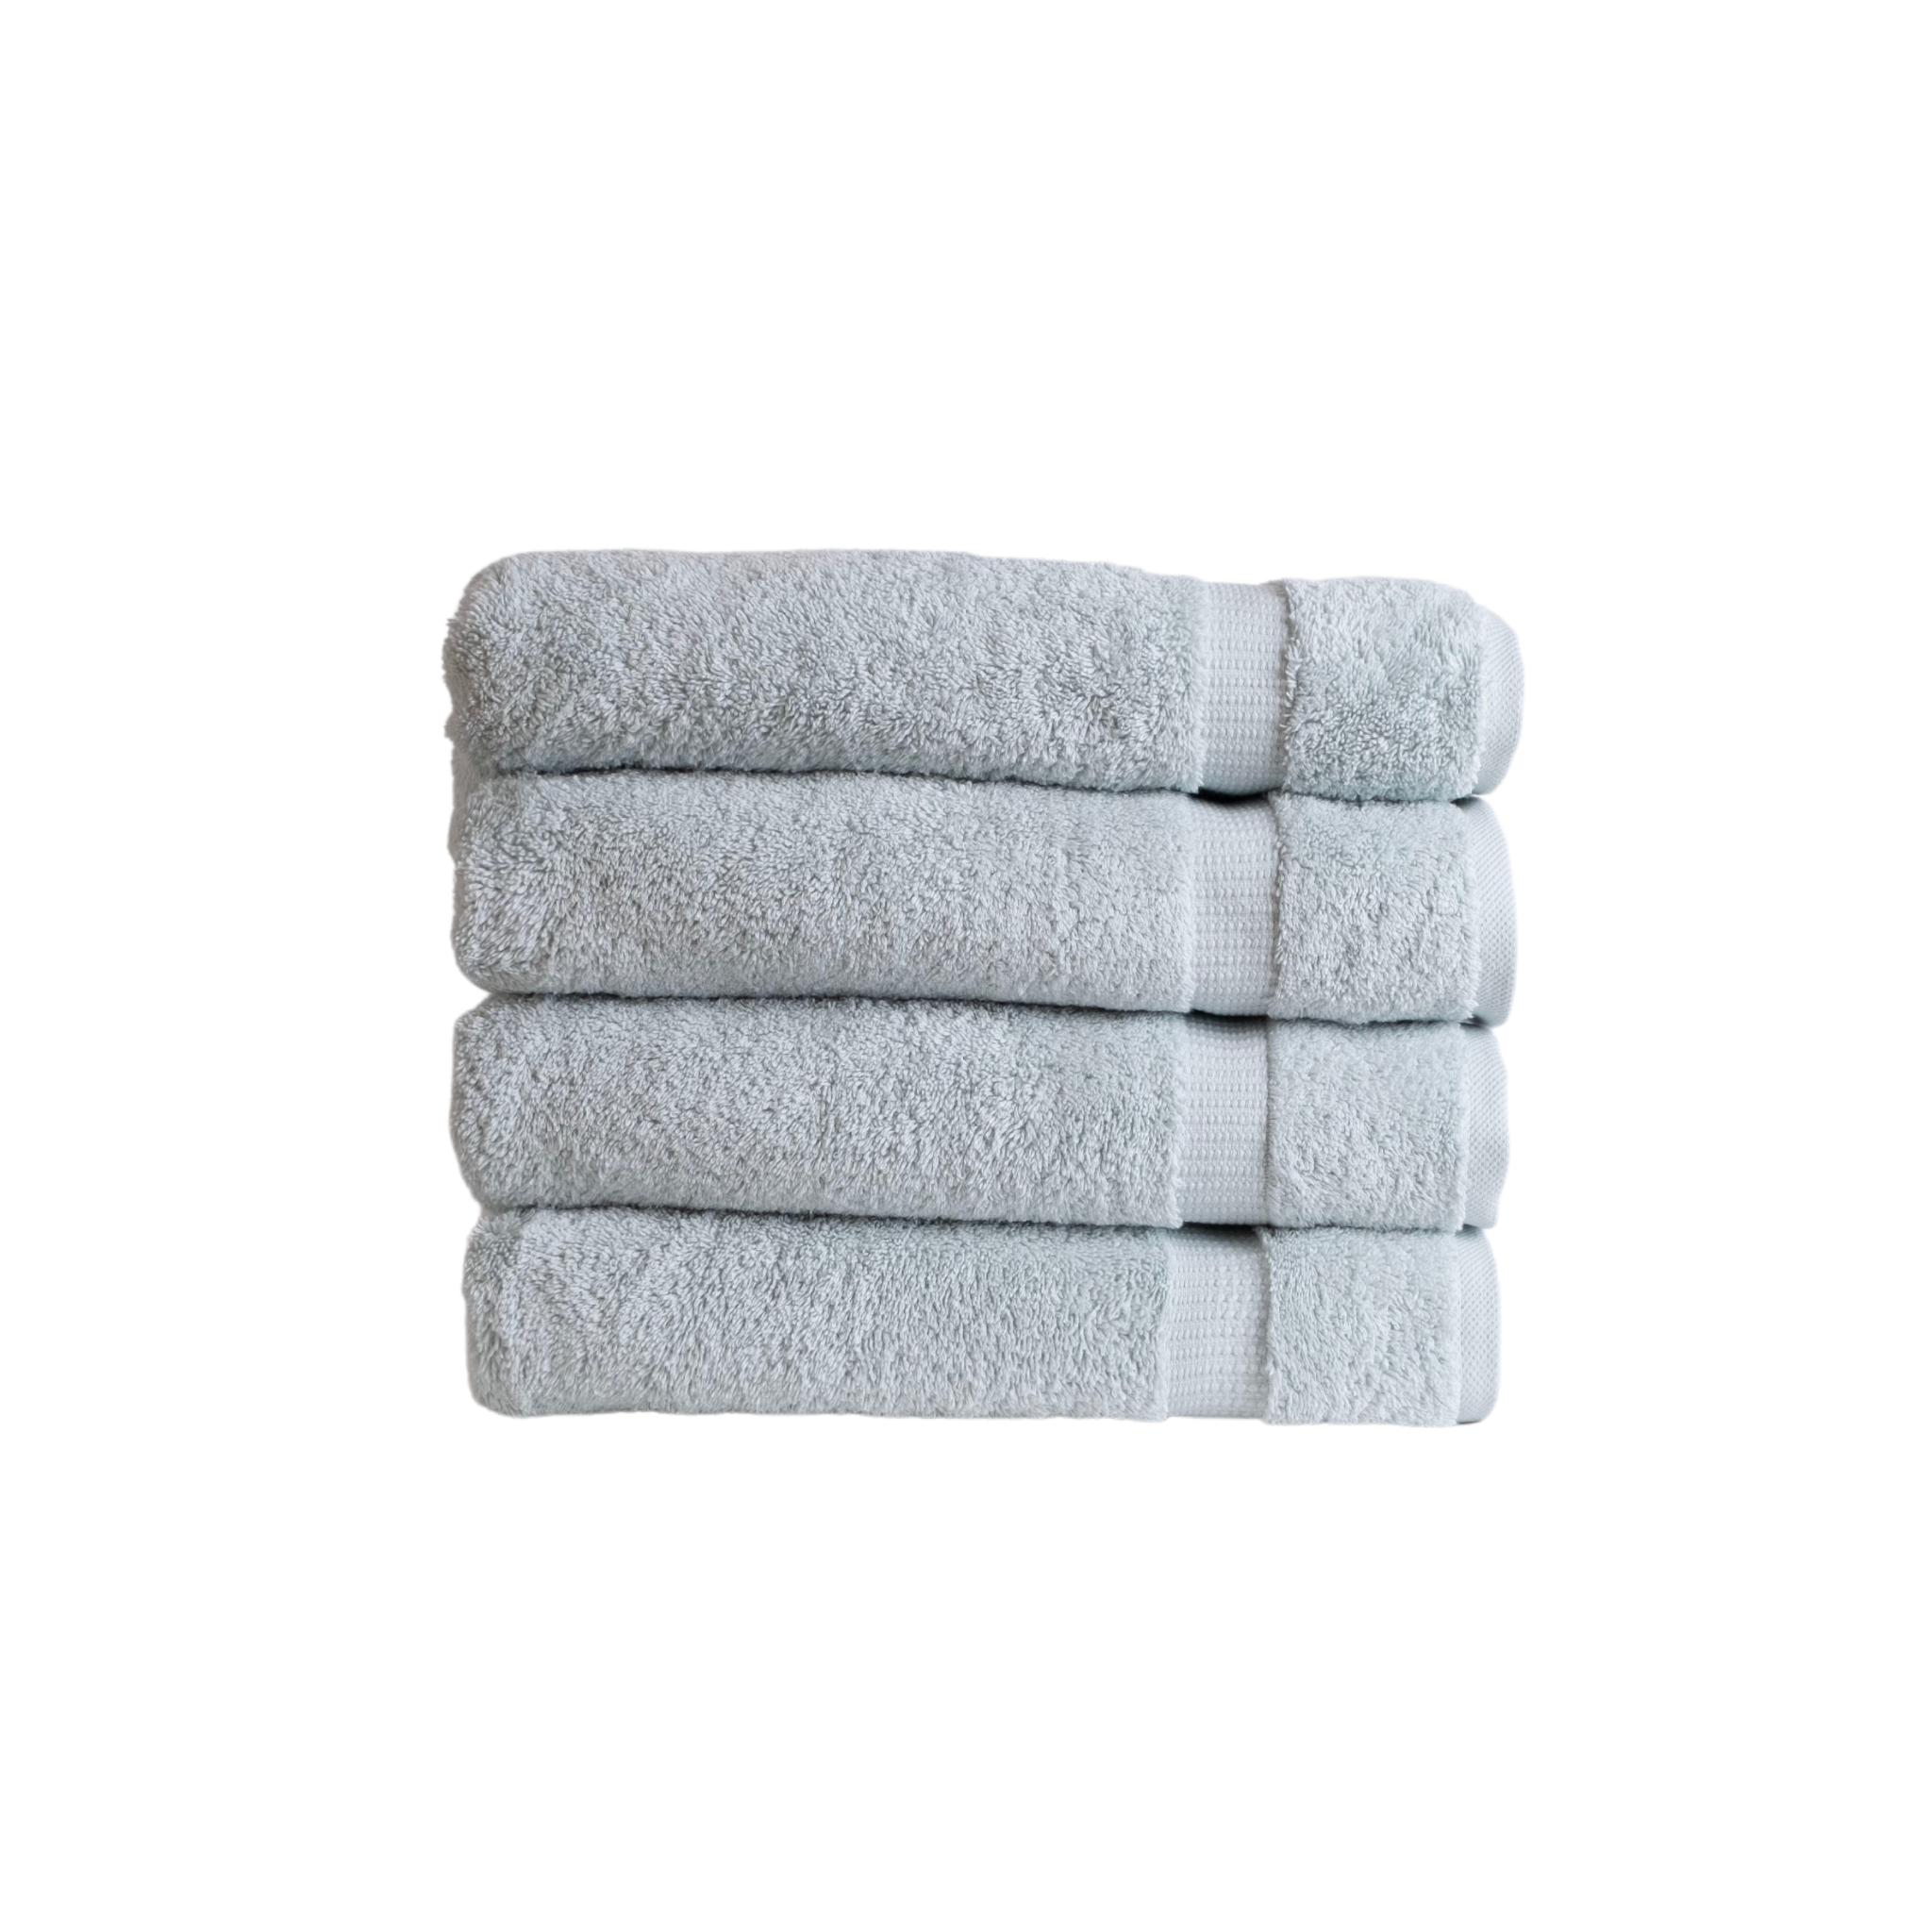 Salbakos Cambridge Bath Towel (4-Pack)